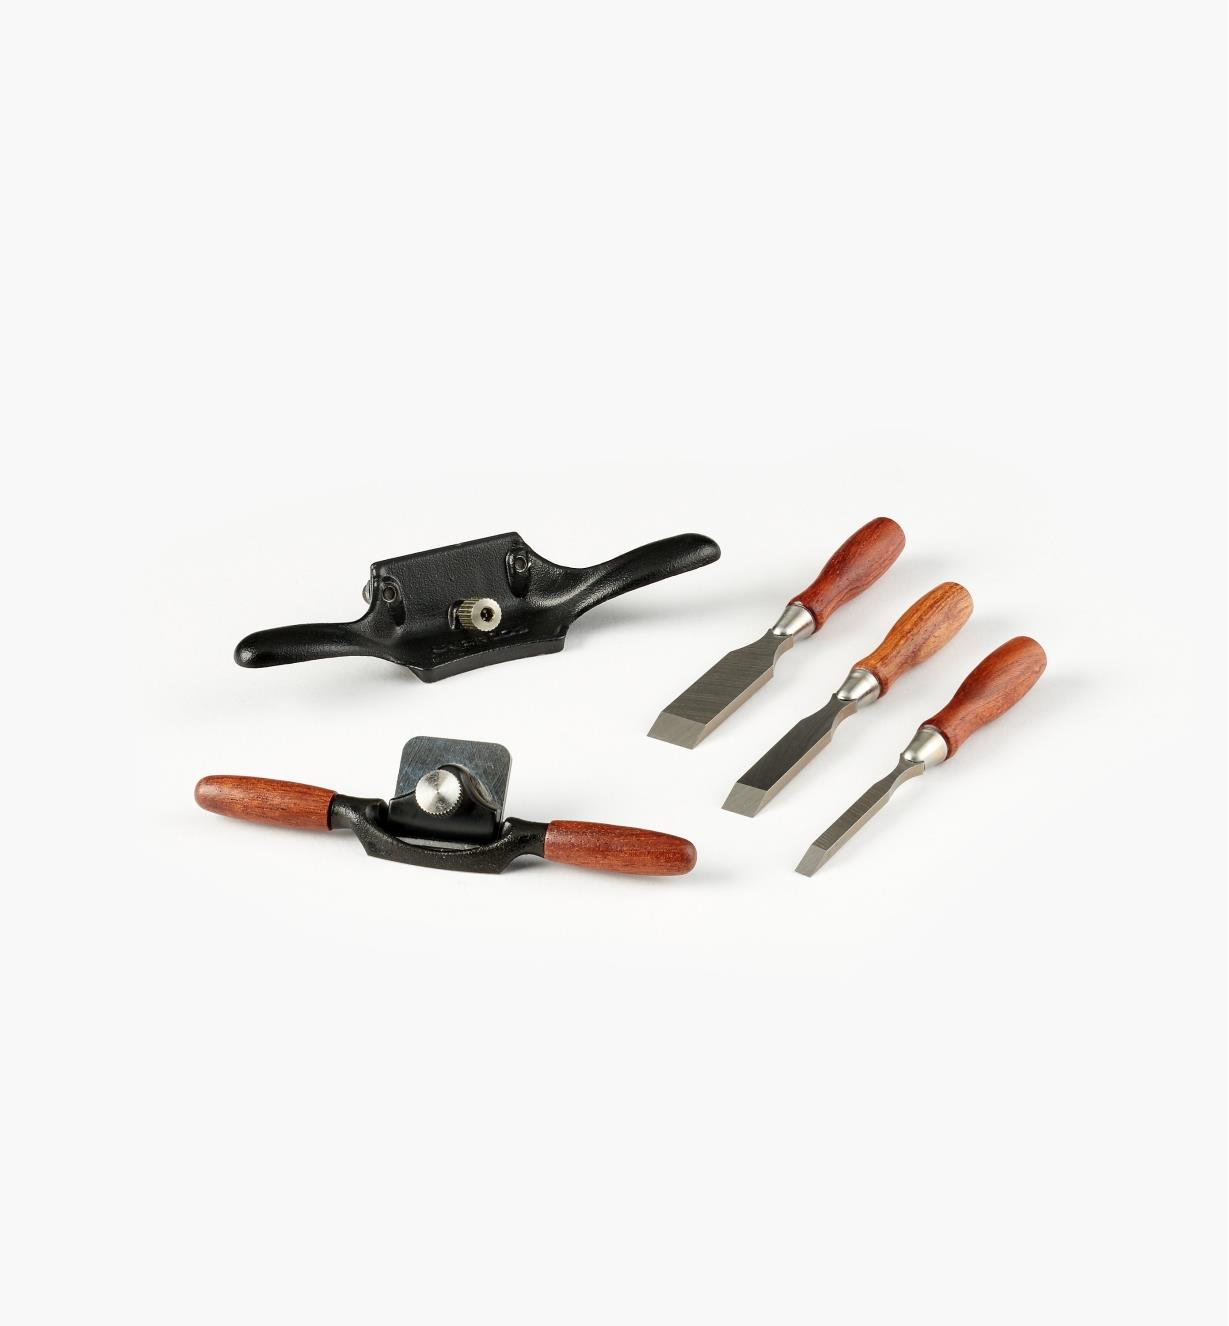 05P8267 - Set of 3 Veritas Miniature Tools (Spokeshave, Chisels, Scraper)